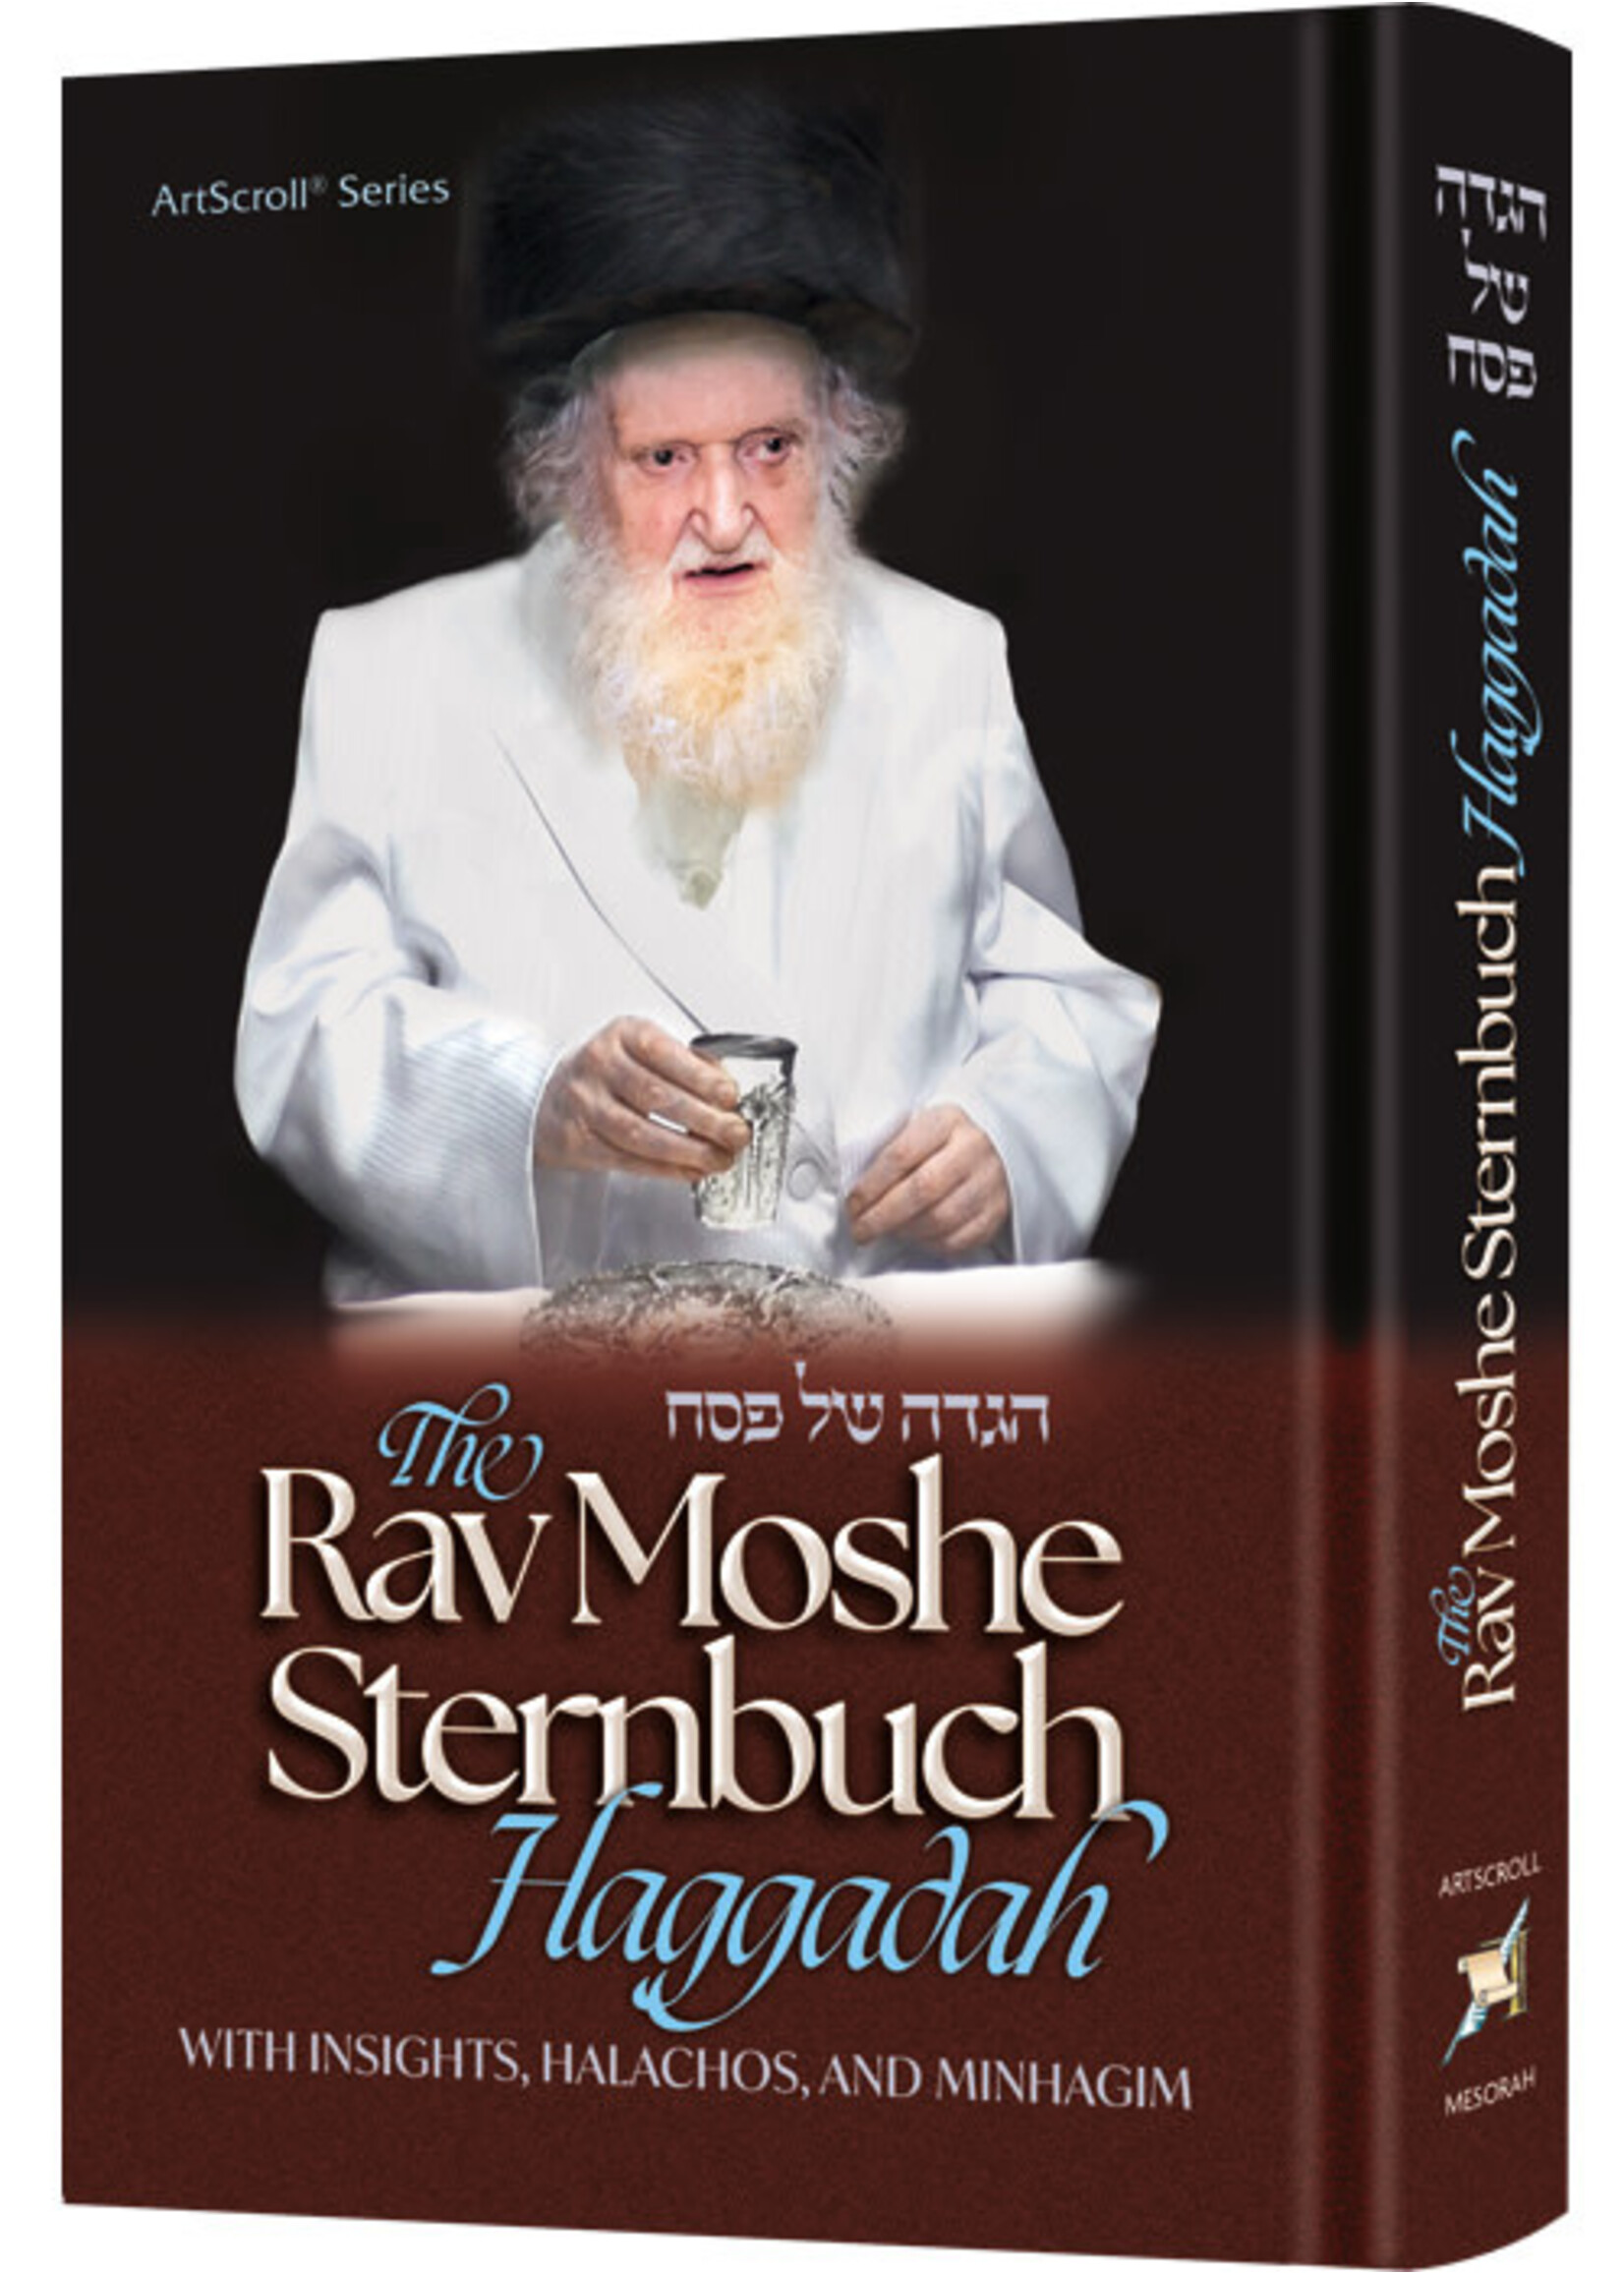 RAV MOSHE STERNBUCH HAGGADAH